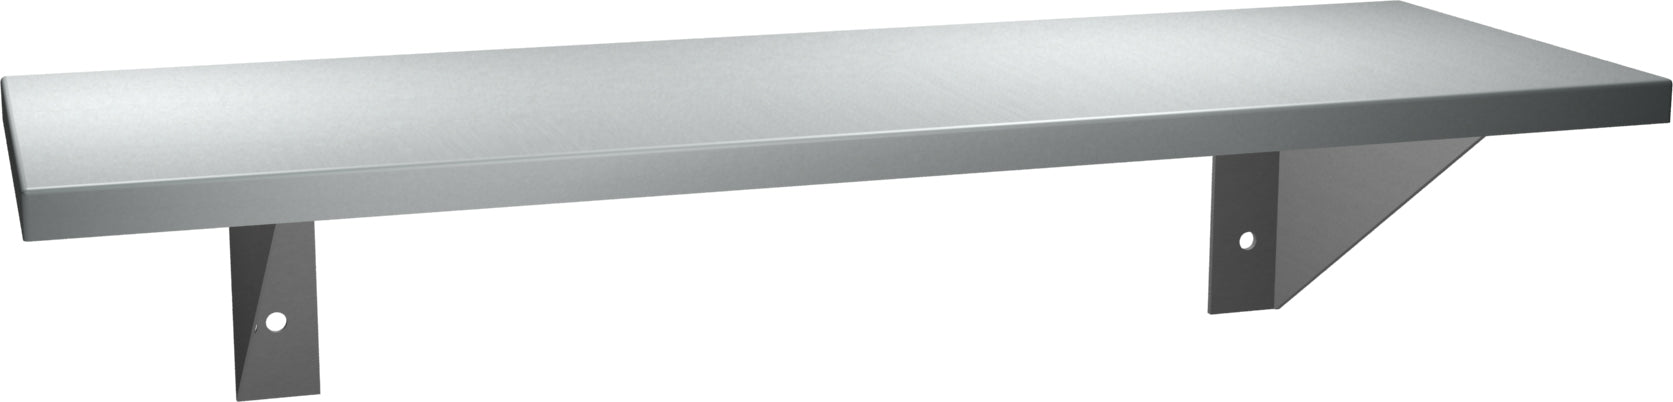 ASI 0692-830 Shelf, Stainless Steel, 8 X 30 Inch